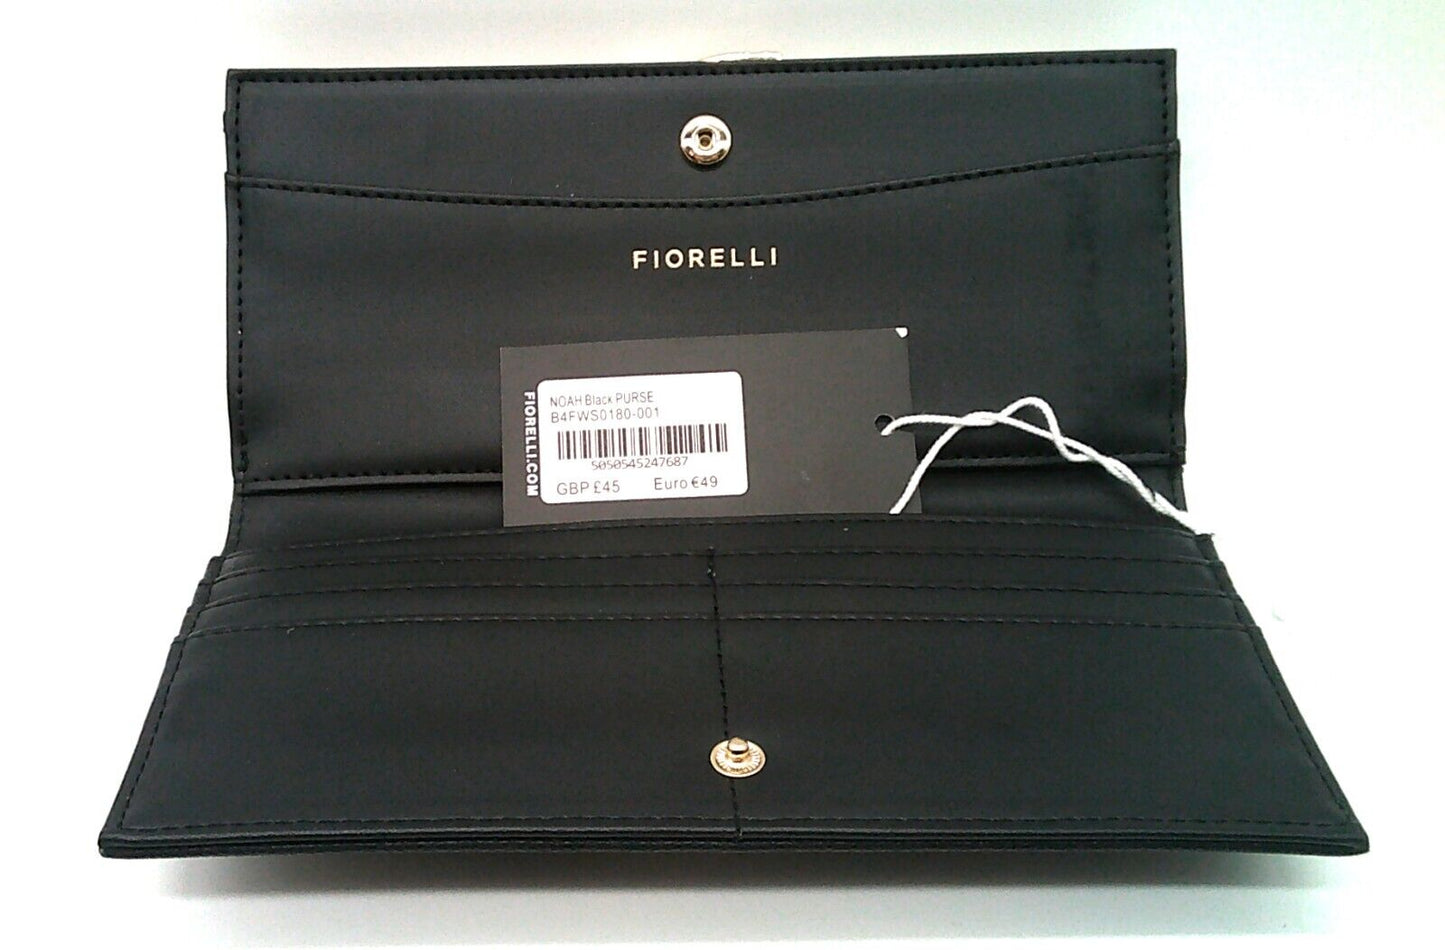 Fiorelli Noah purse black RRP £45